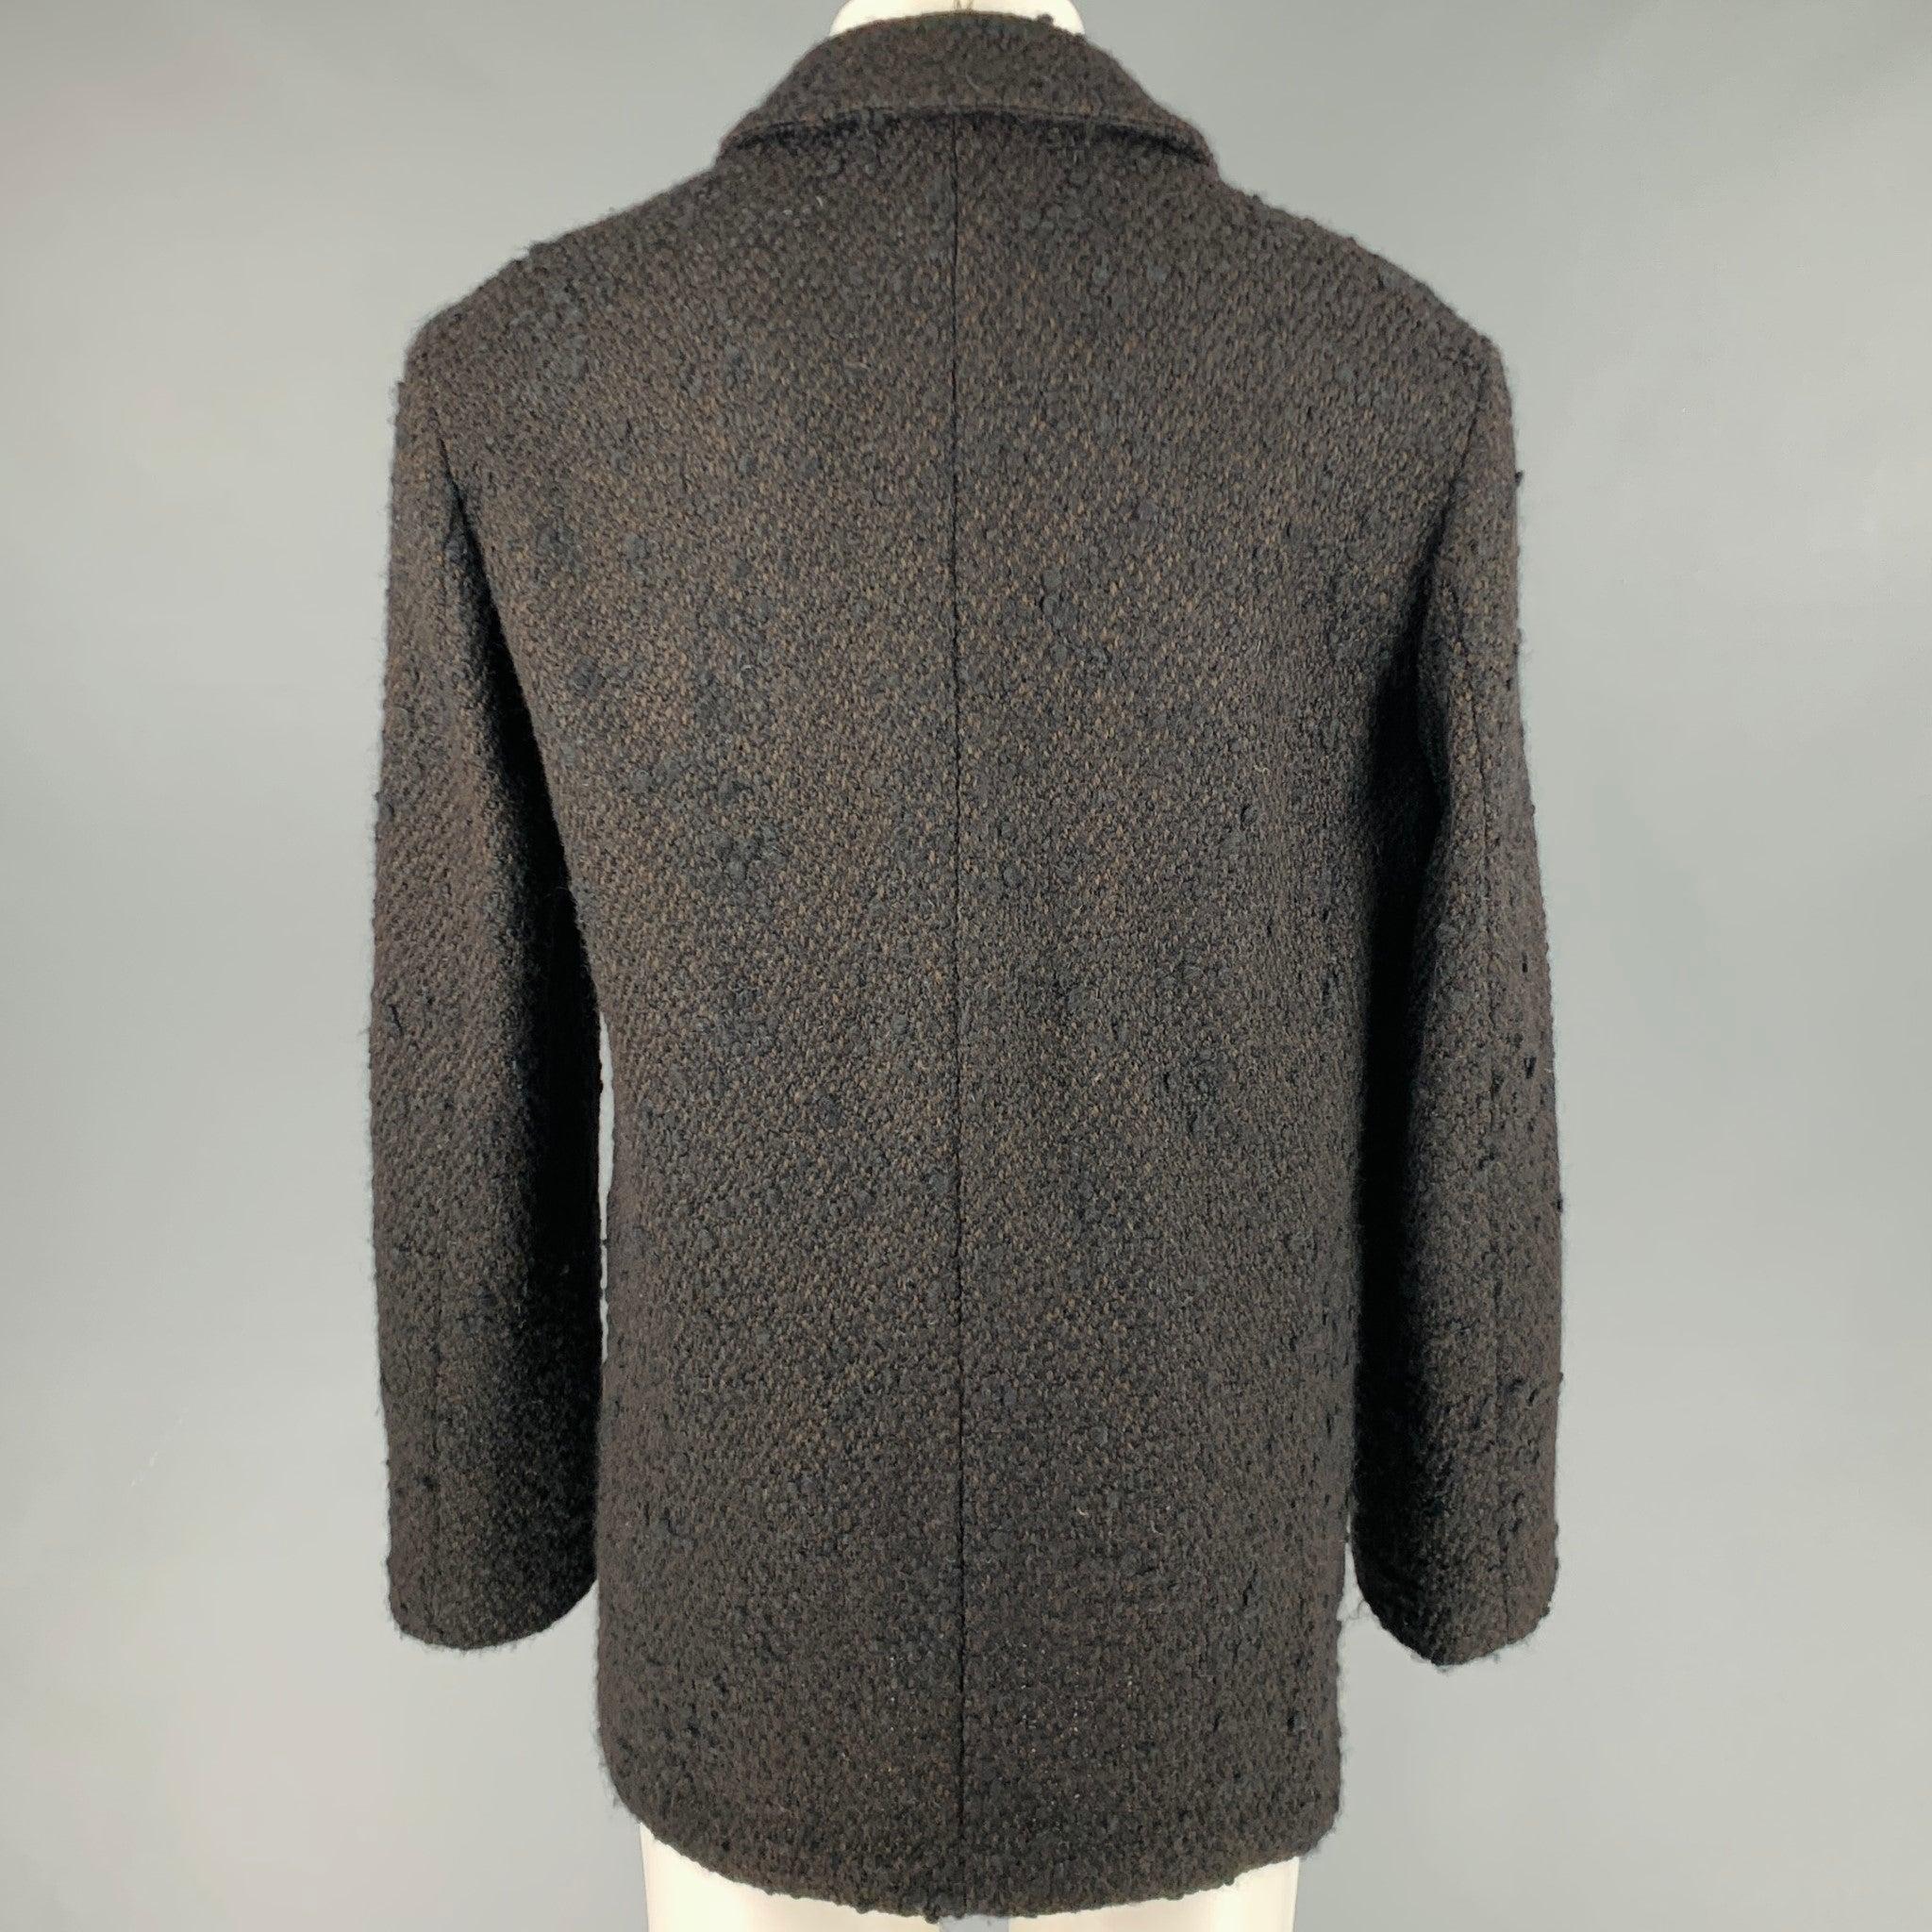 Men's PRADA Size 40 Black Brown Tweed Wool Blend Patch Pockets Jacket